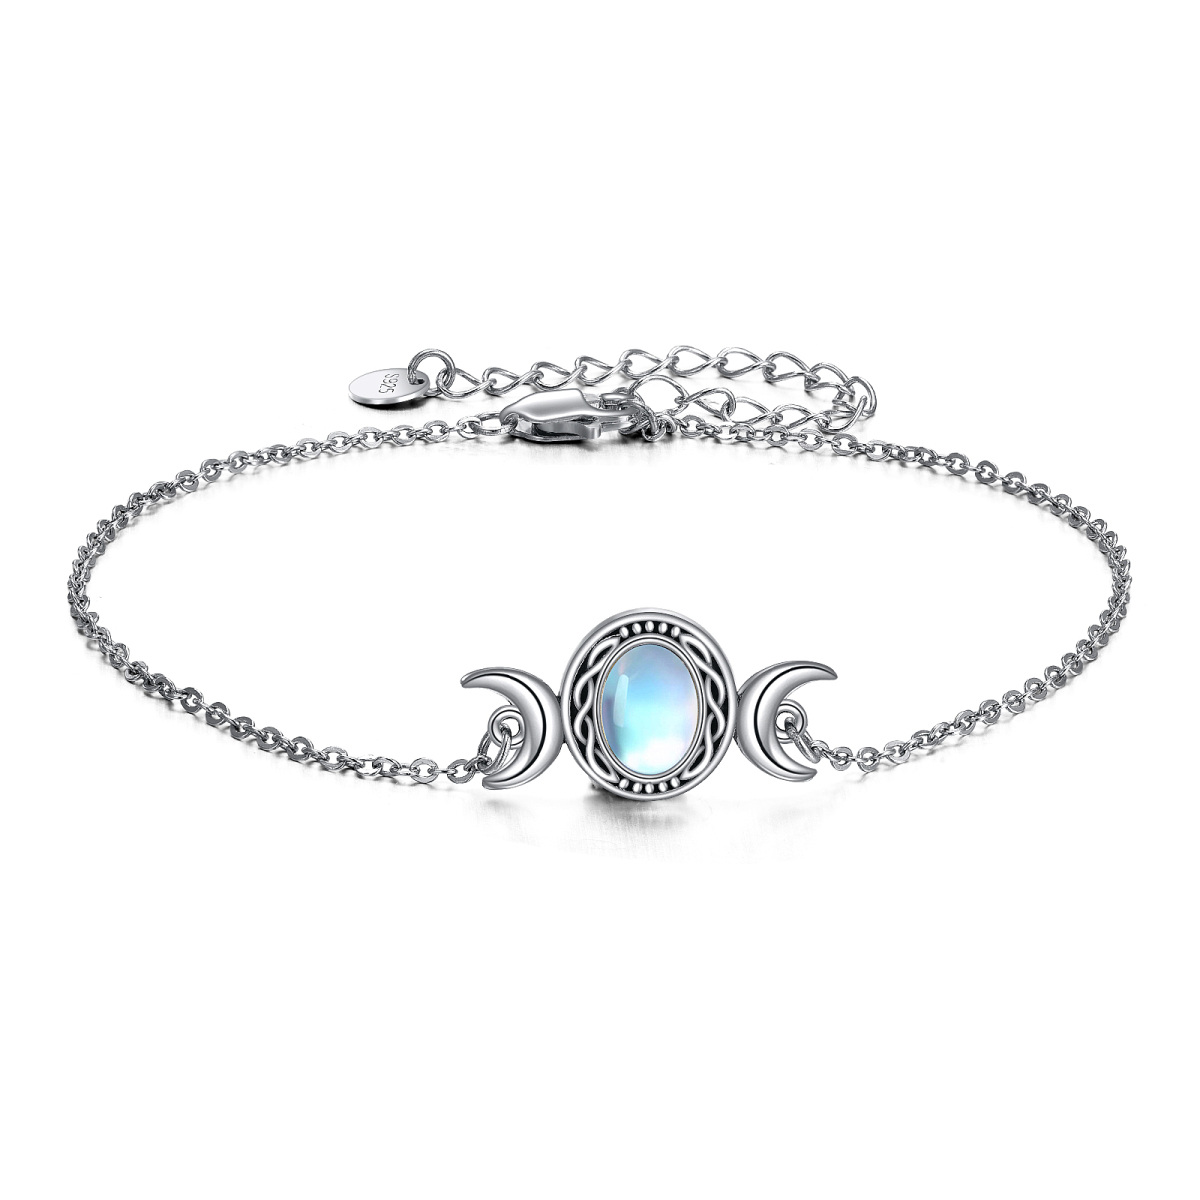 Bracelet en argent sterling avec pendentif en pierre de lune de forme ovale-1